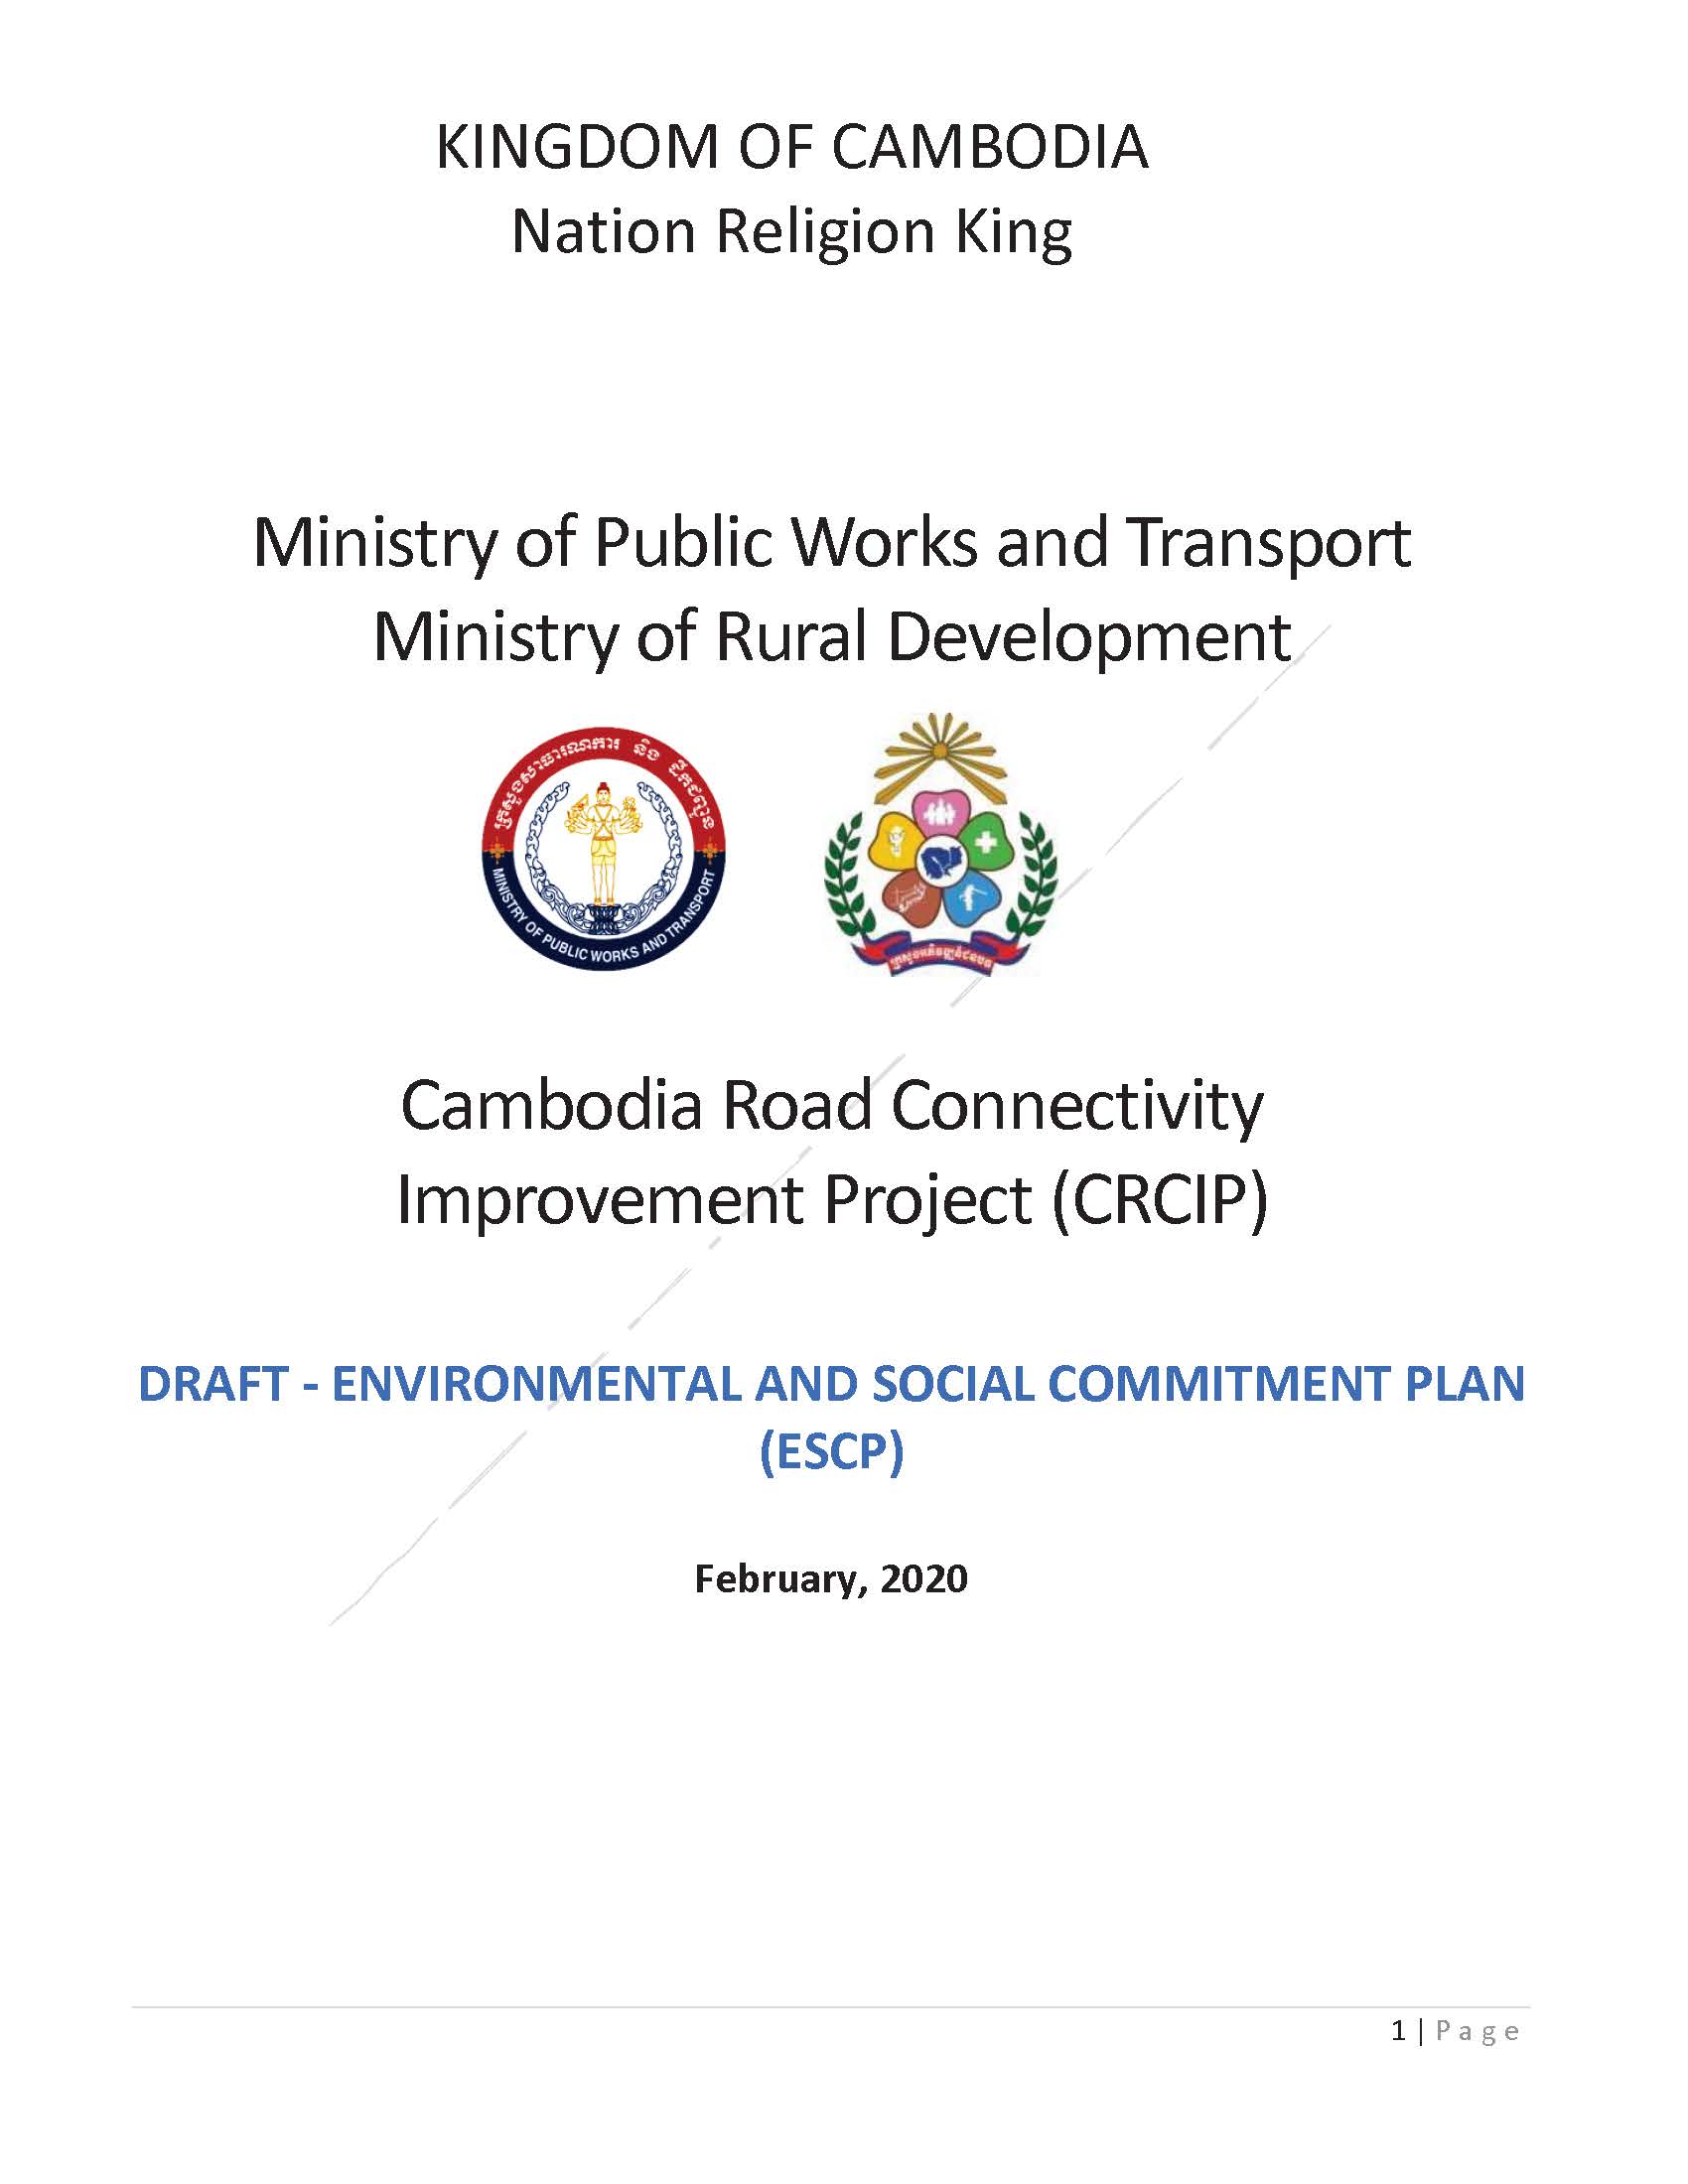 Draft Environmental and Social Commitment Plan (ESCP)